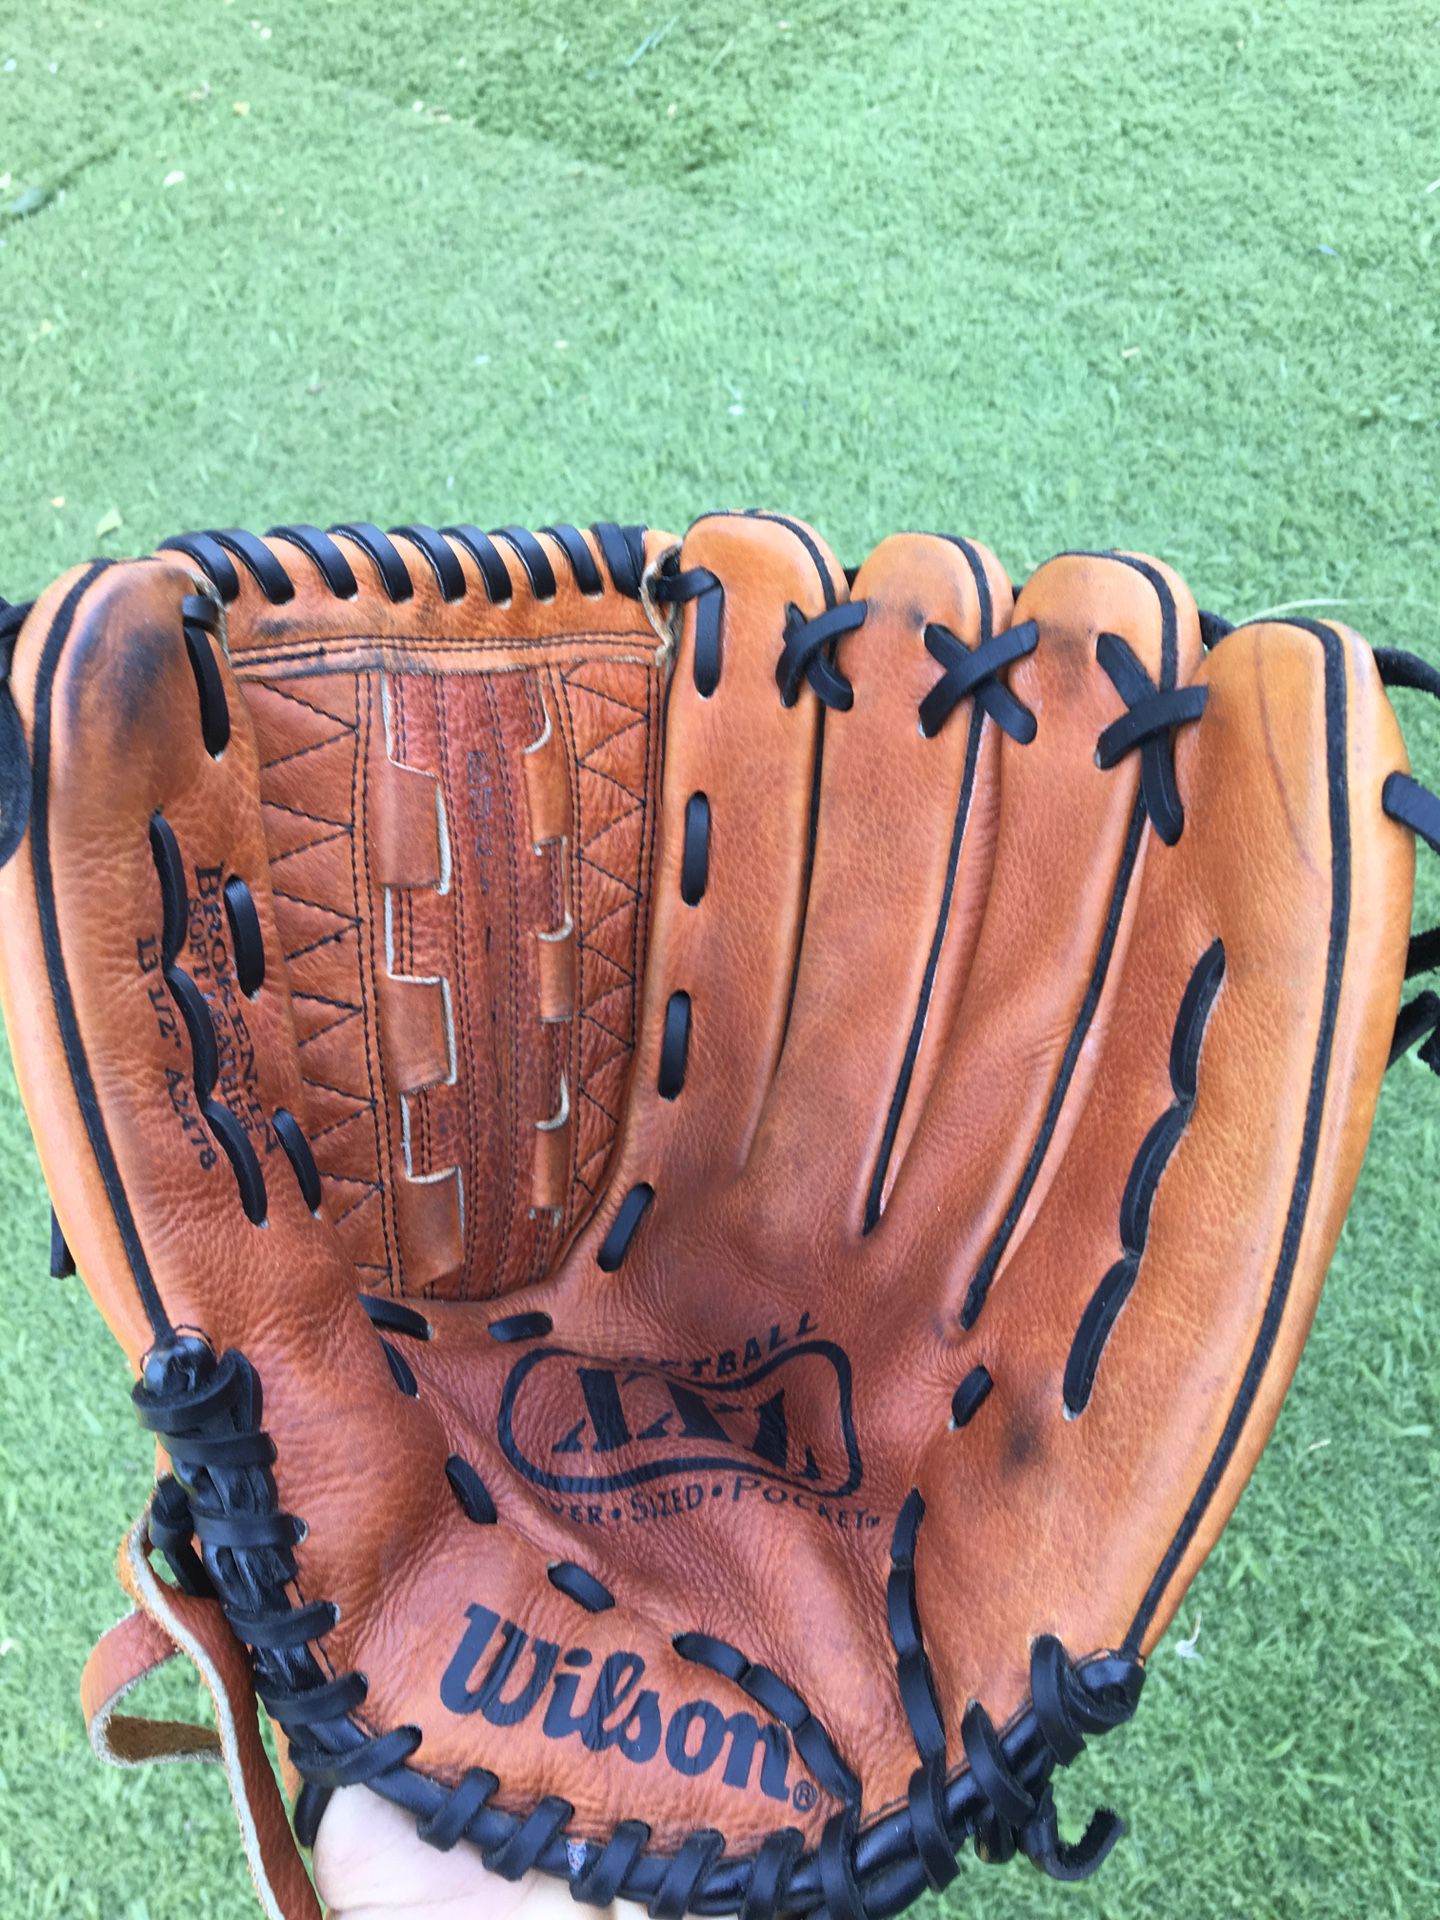 Wilson XXL Softball Glove Leather.